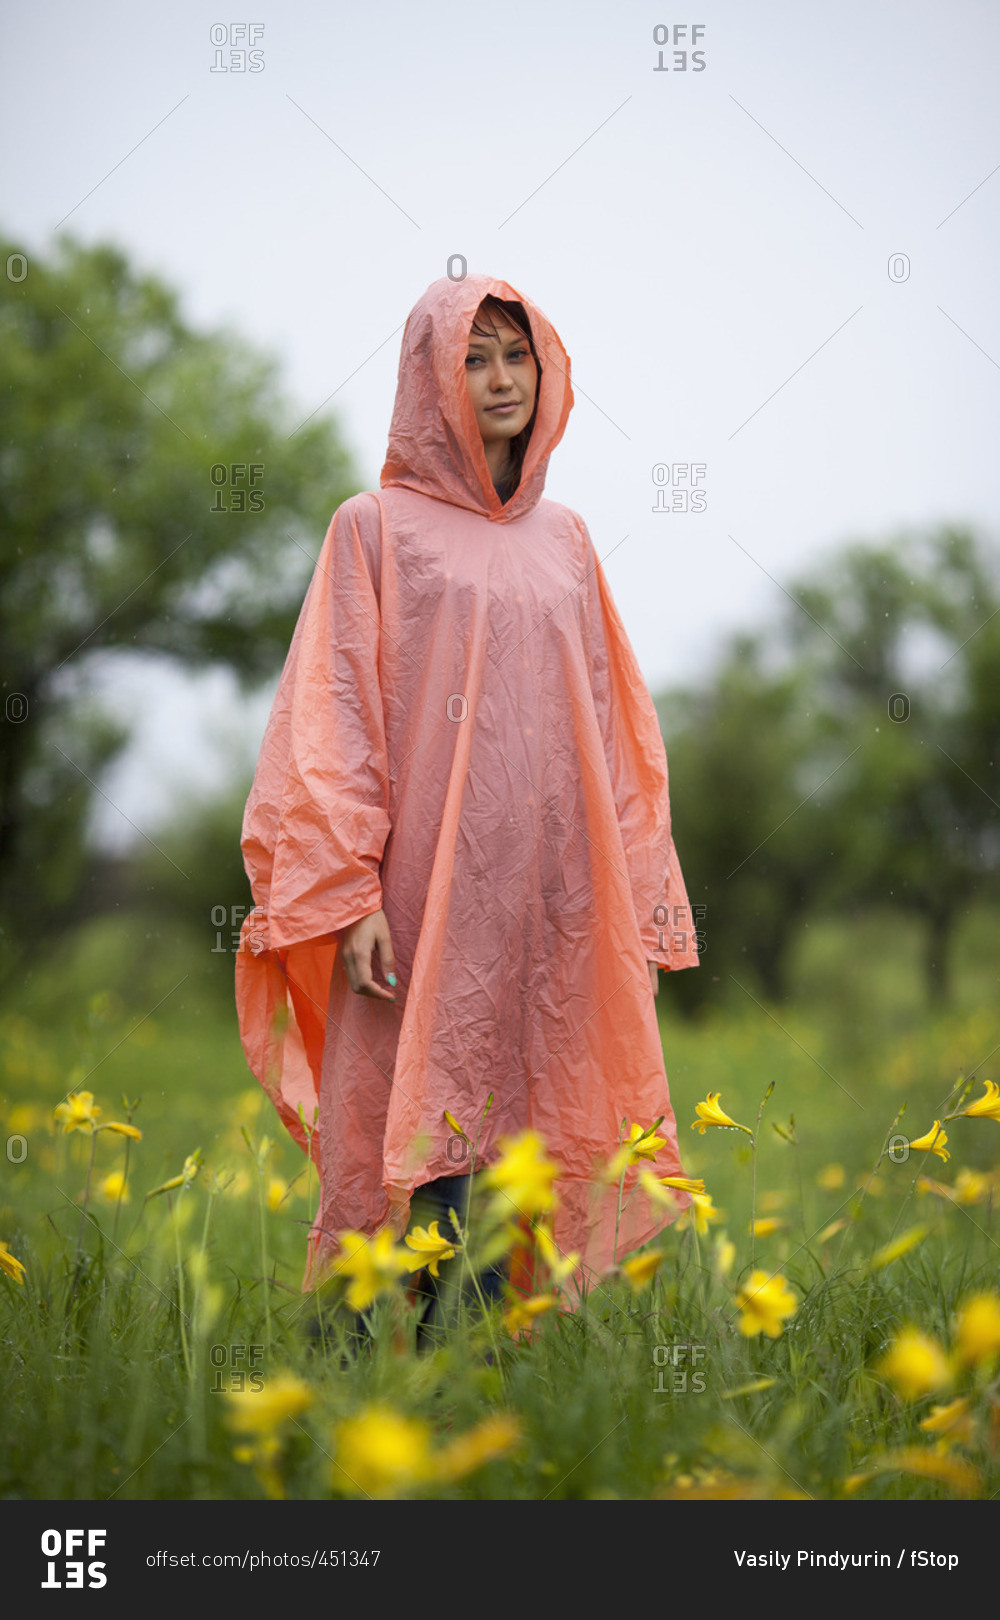 Woman wearing raincoat standing amidst yellow flowering plants in rainy season